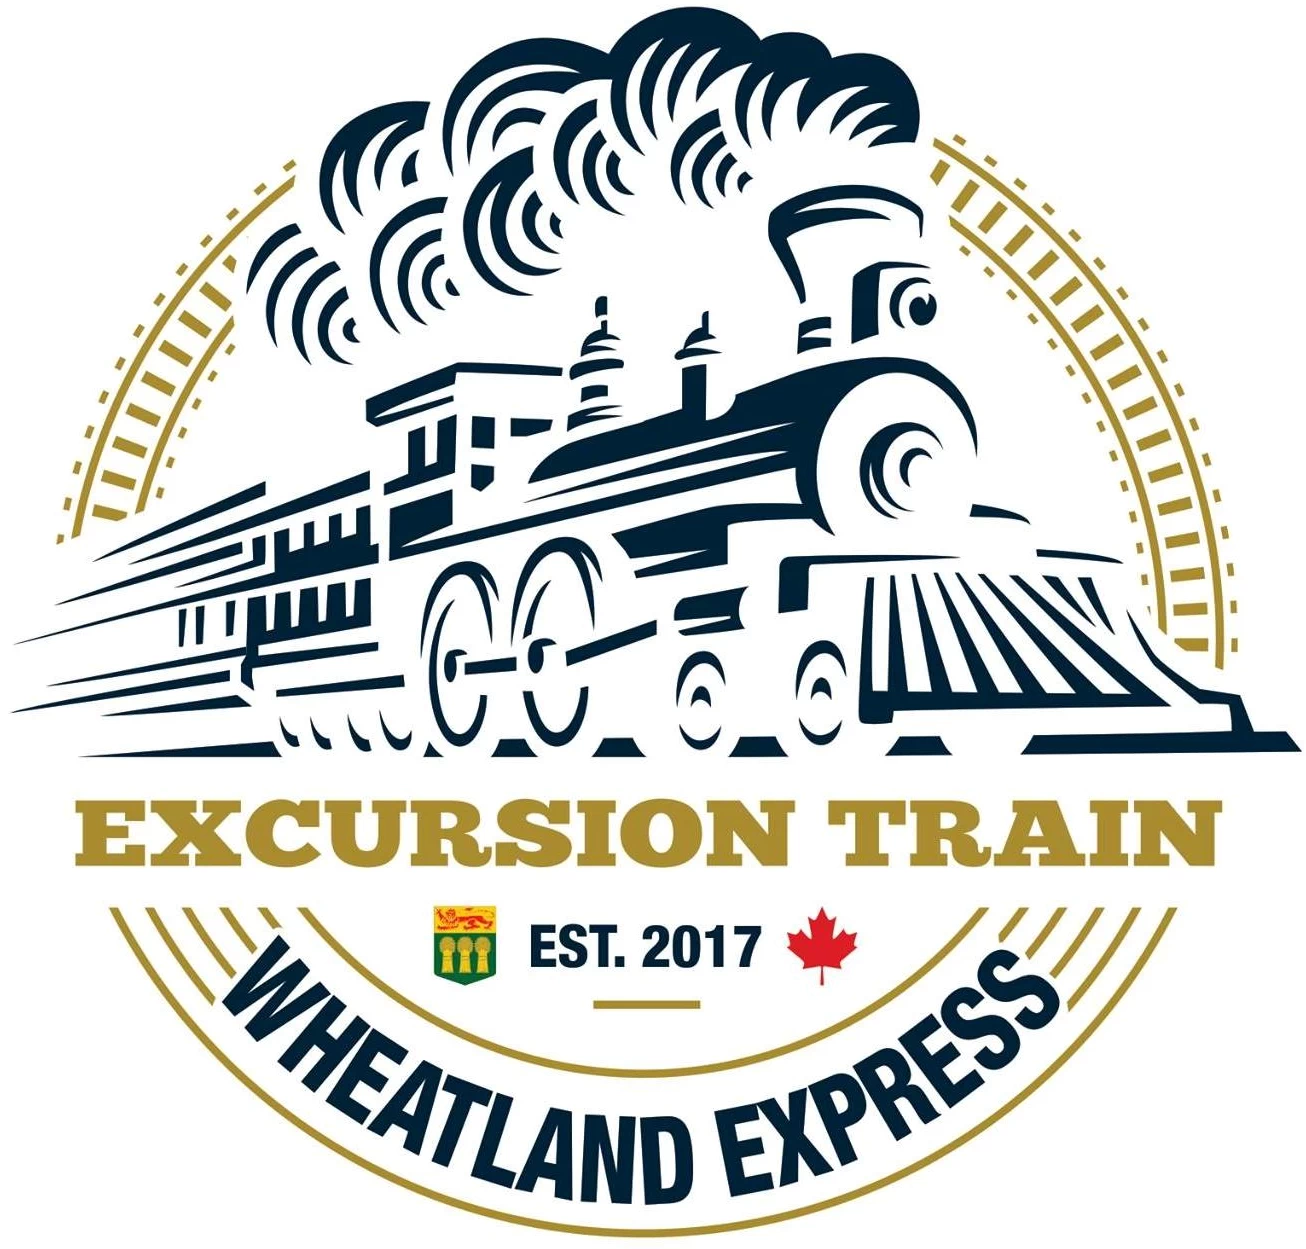 Wheatland Express Train